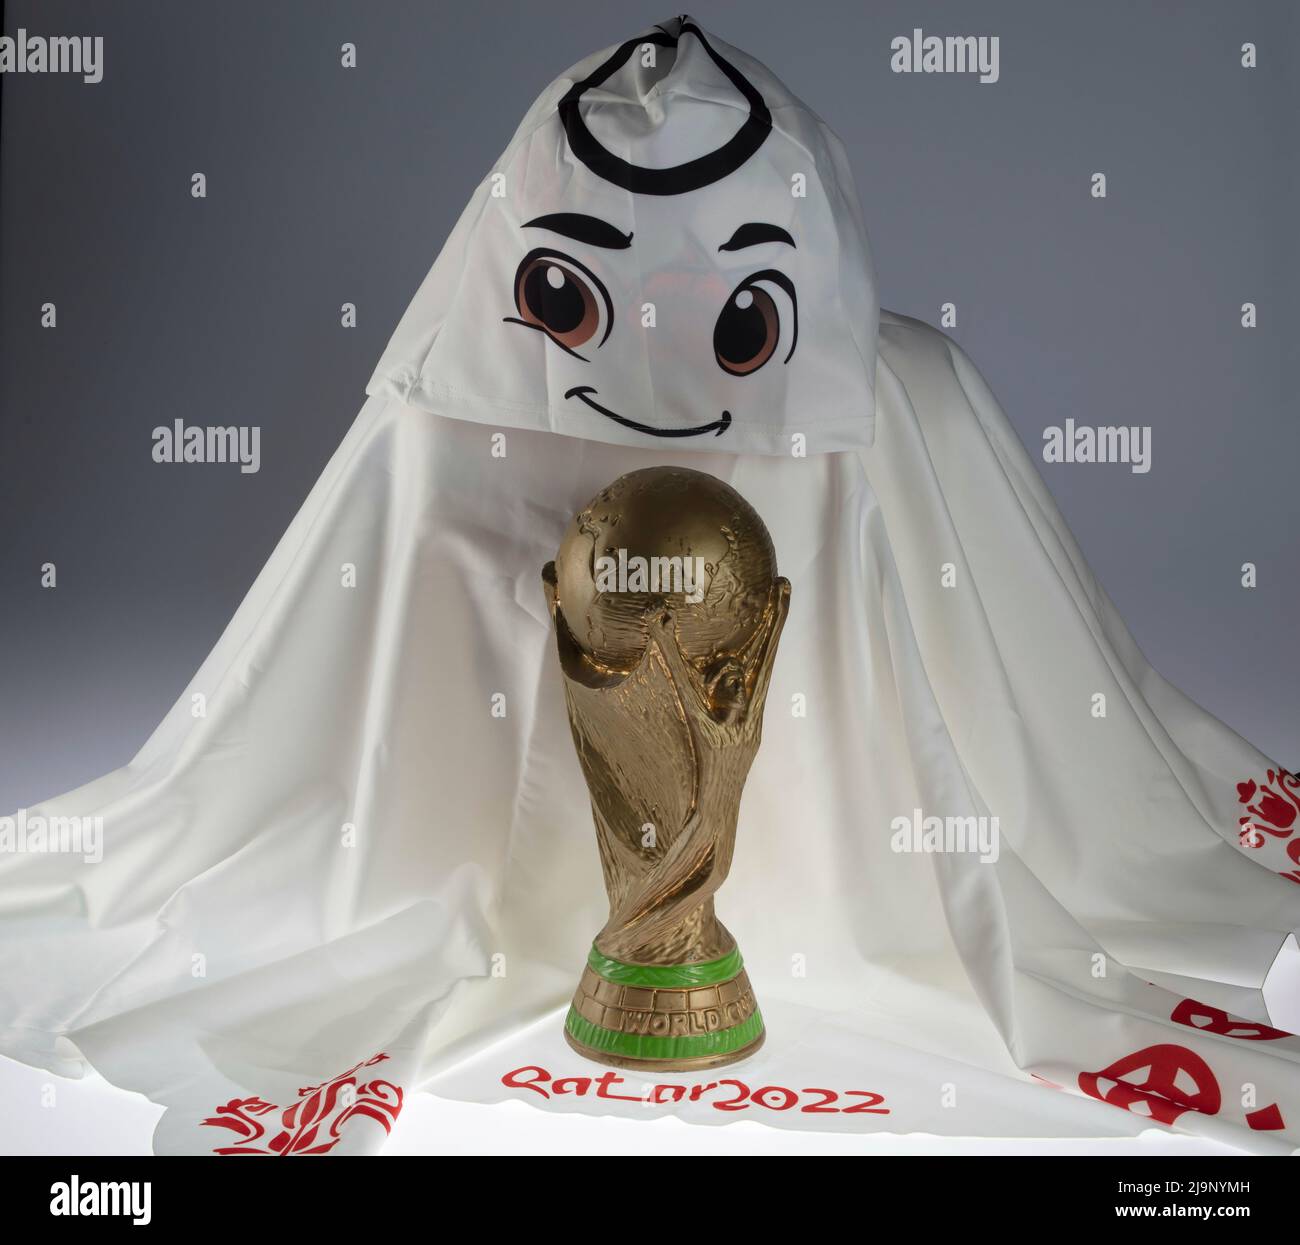 La'eeb (FIFA World Cup 2022 Mascot)